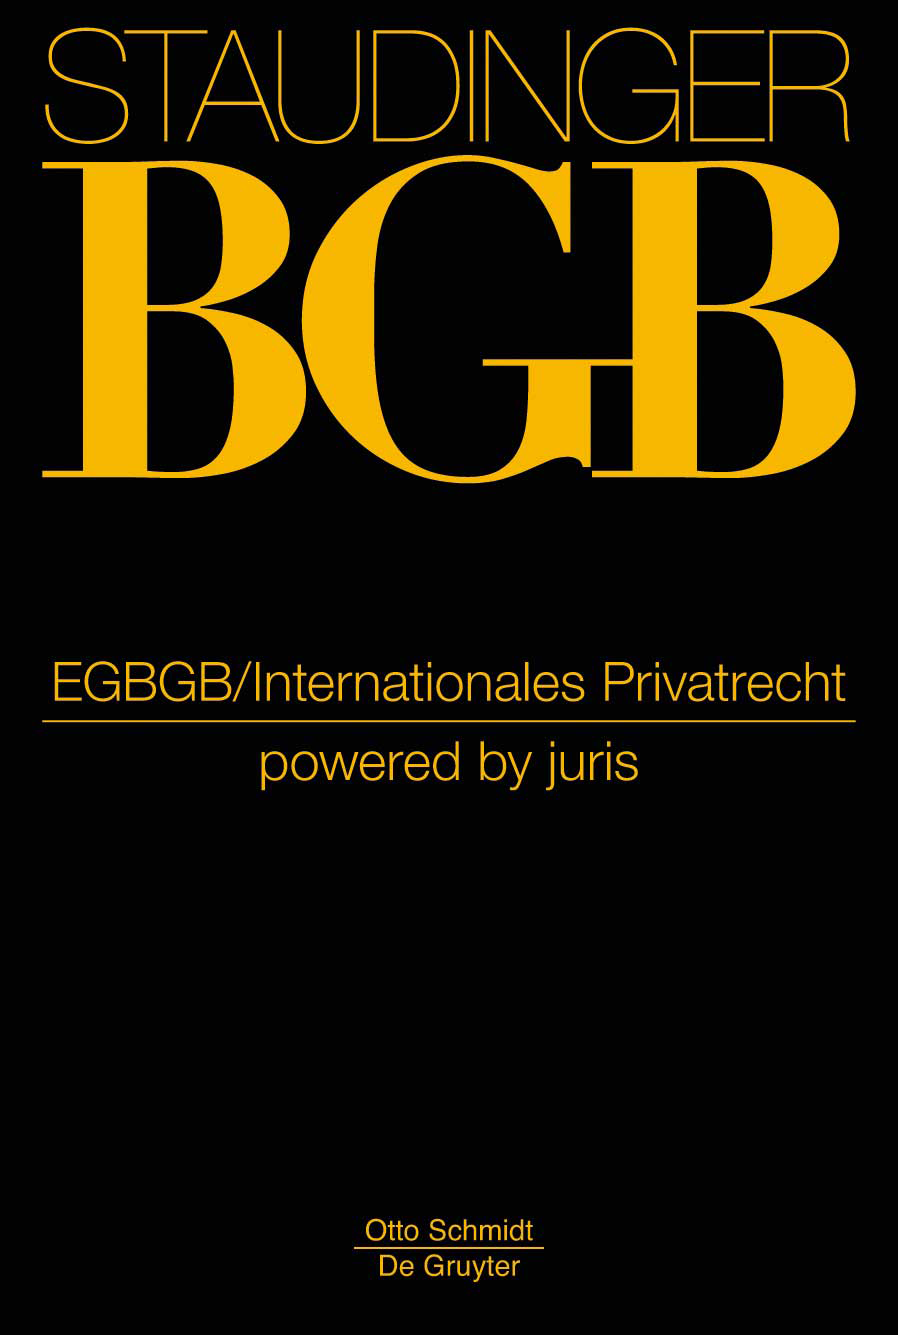 Abbildung: STAUDINGER Online powered by juris, EGBGB/Internationales Privatrecht